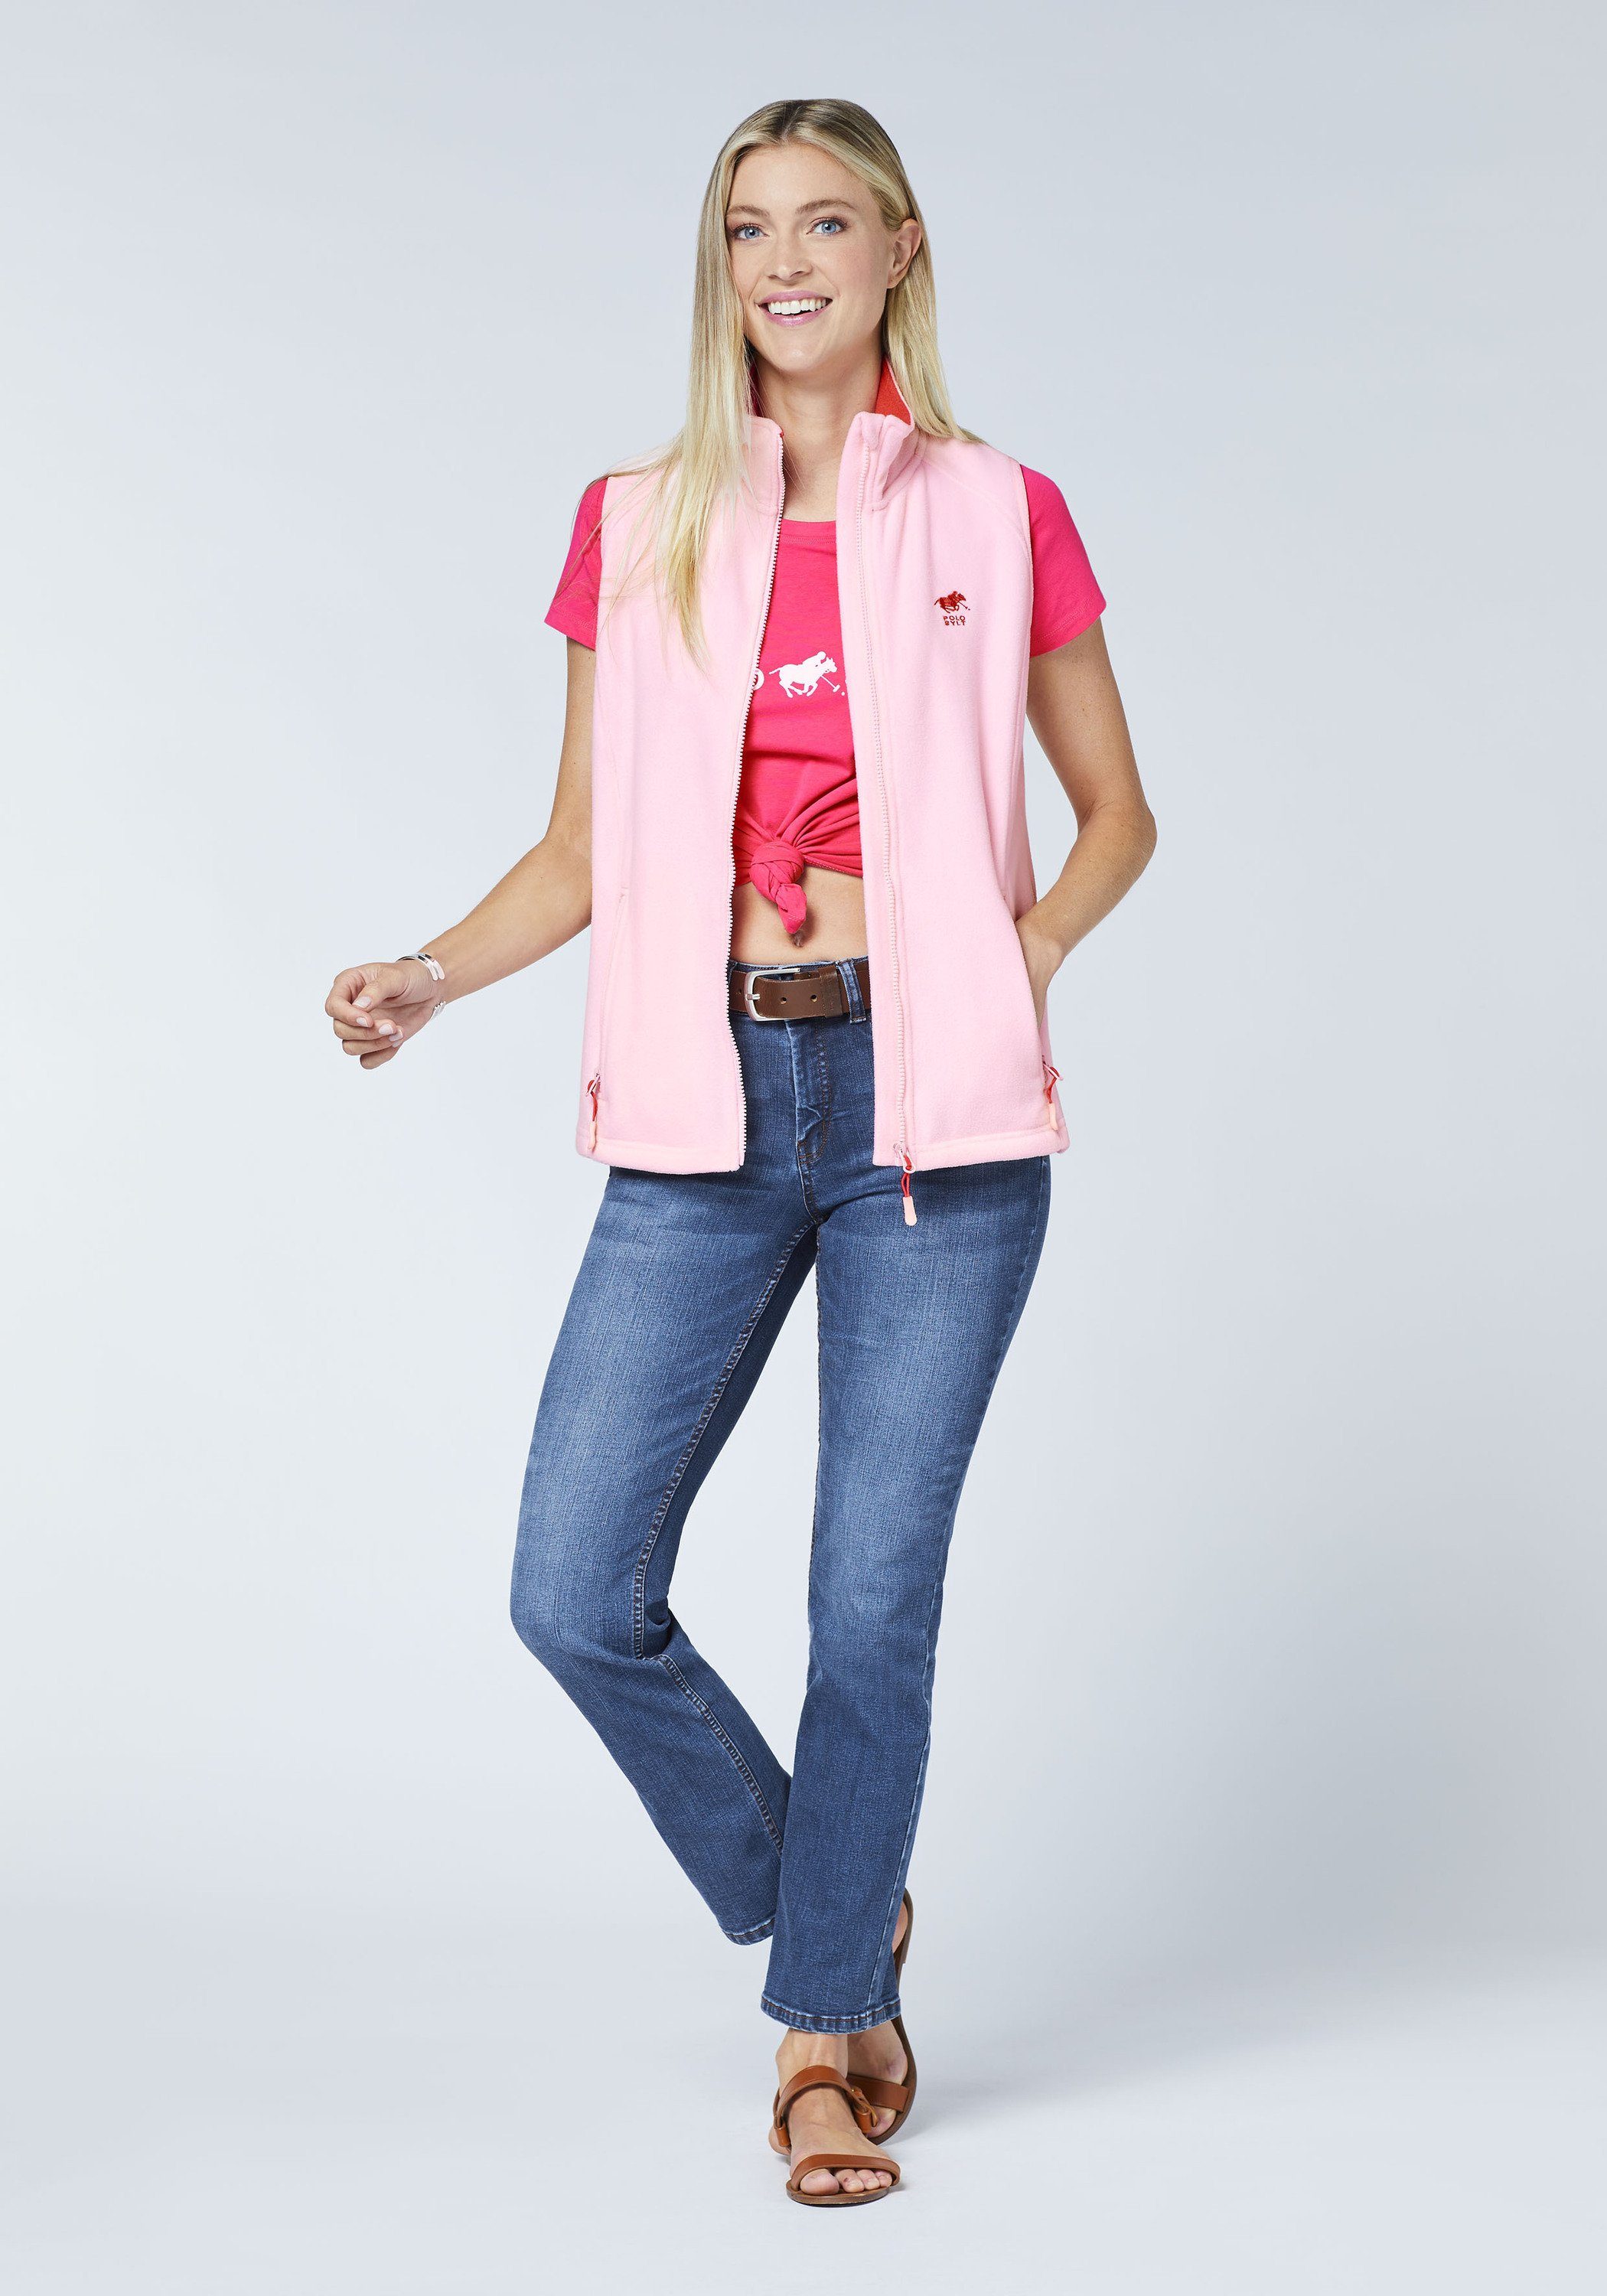 Polo Sylt Fleeceweste Lady 13-2806 Pink mit Frontreißverschluss Kinnschutz